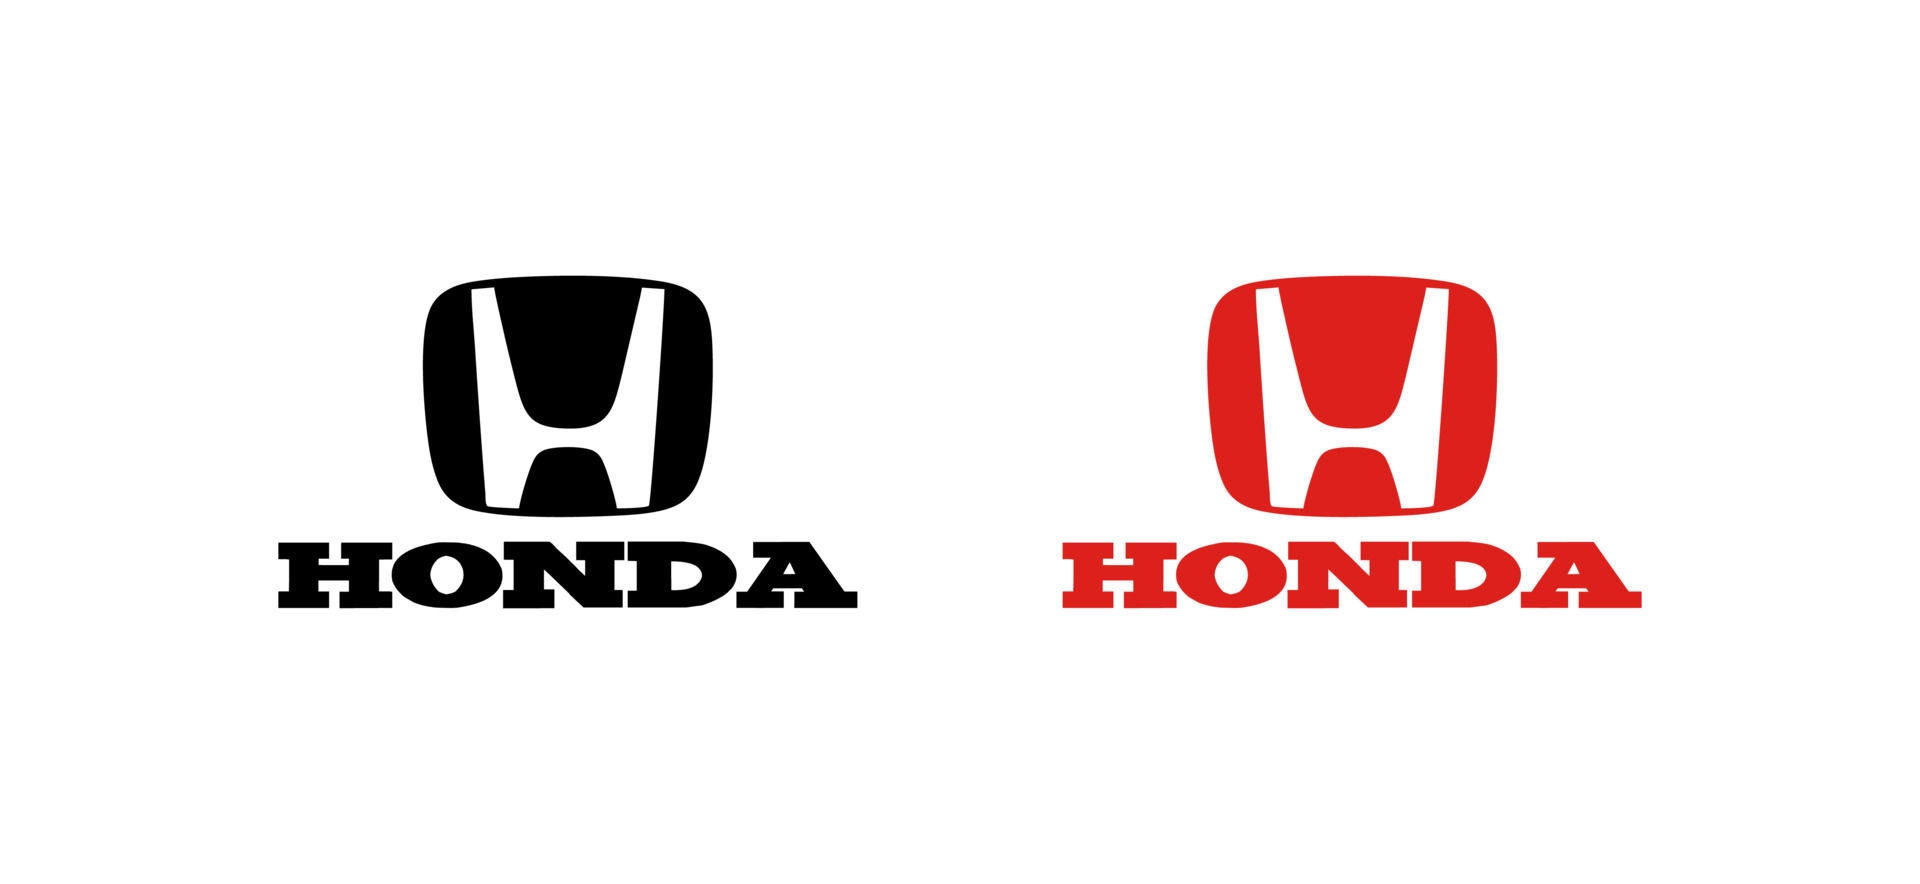 Honda Motorcycle Logo Honda Logo Vector Vector Art At Vecteezy